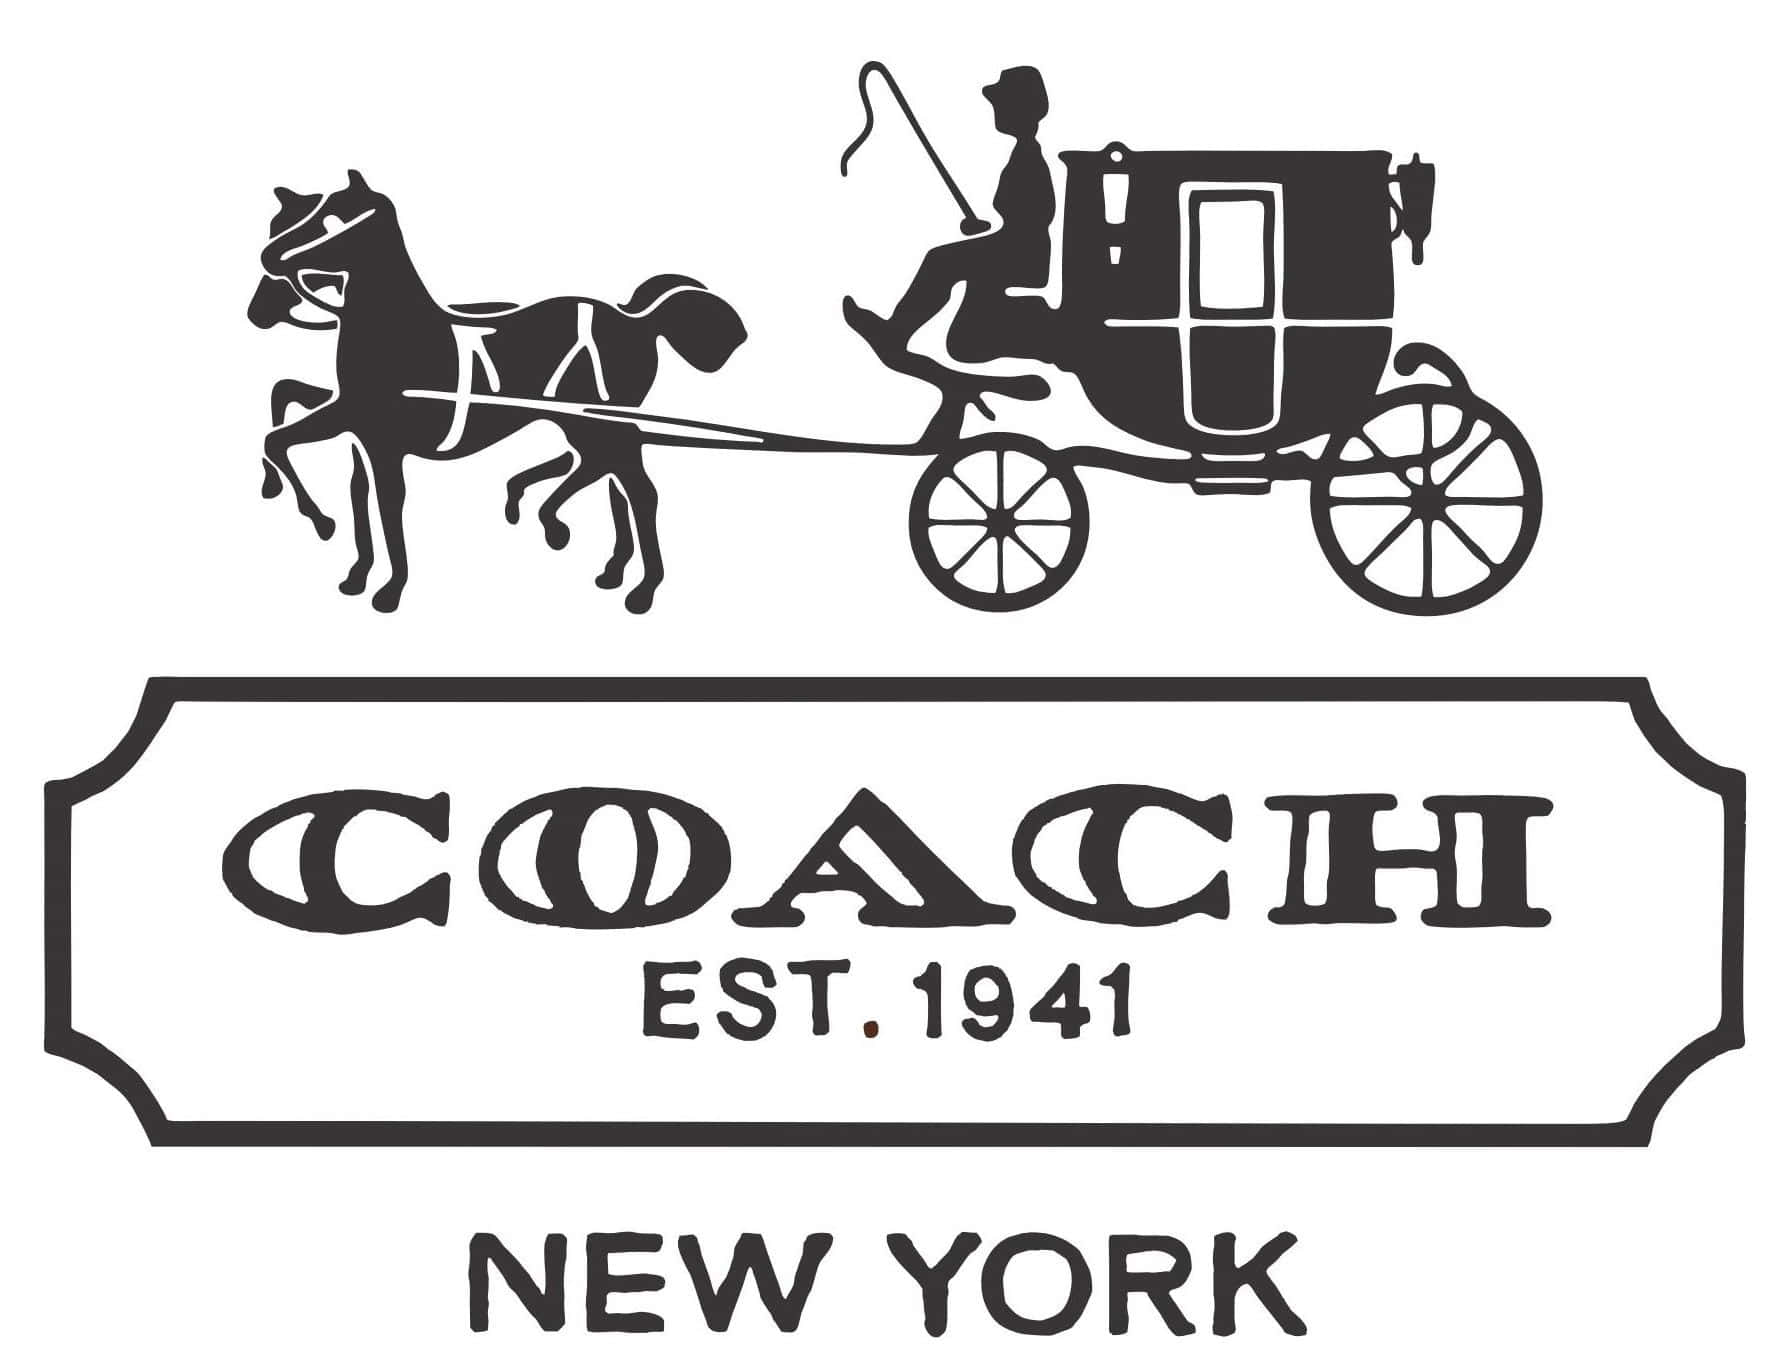 The iconic Coach logo Wallpaper